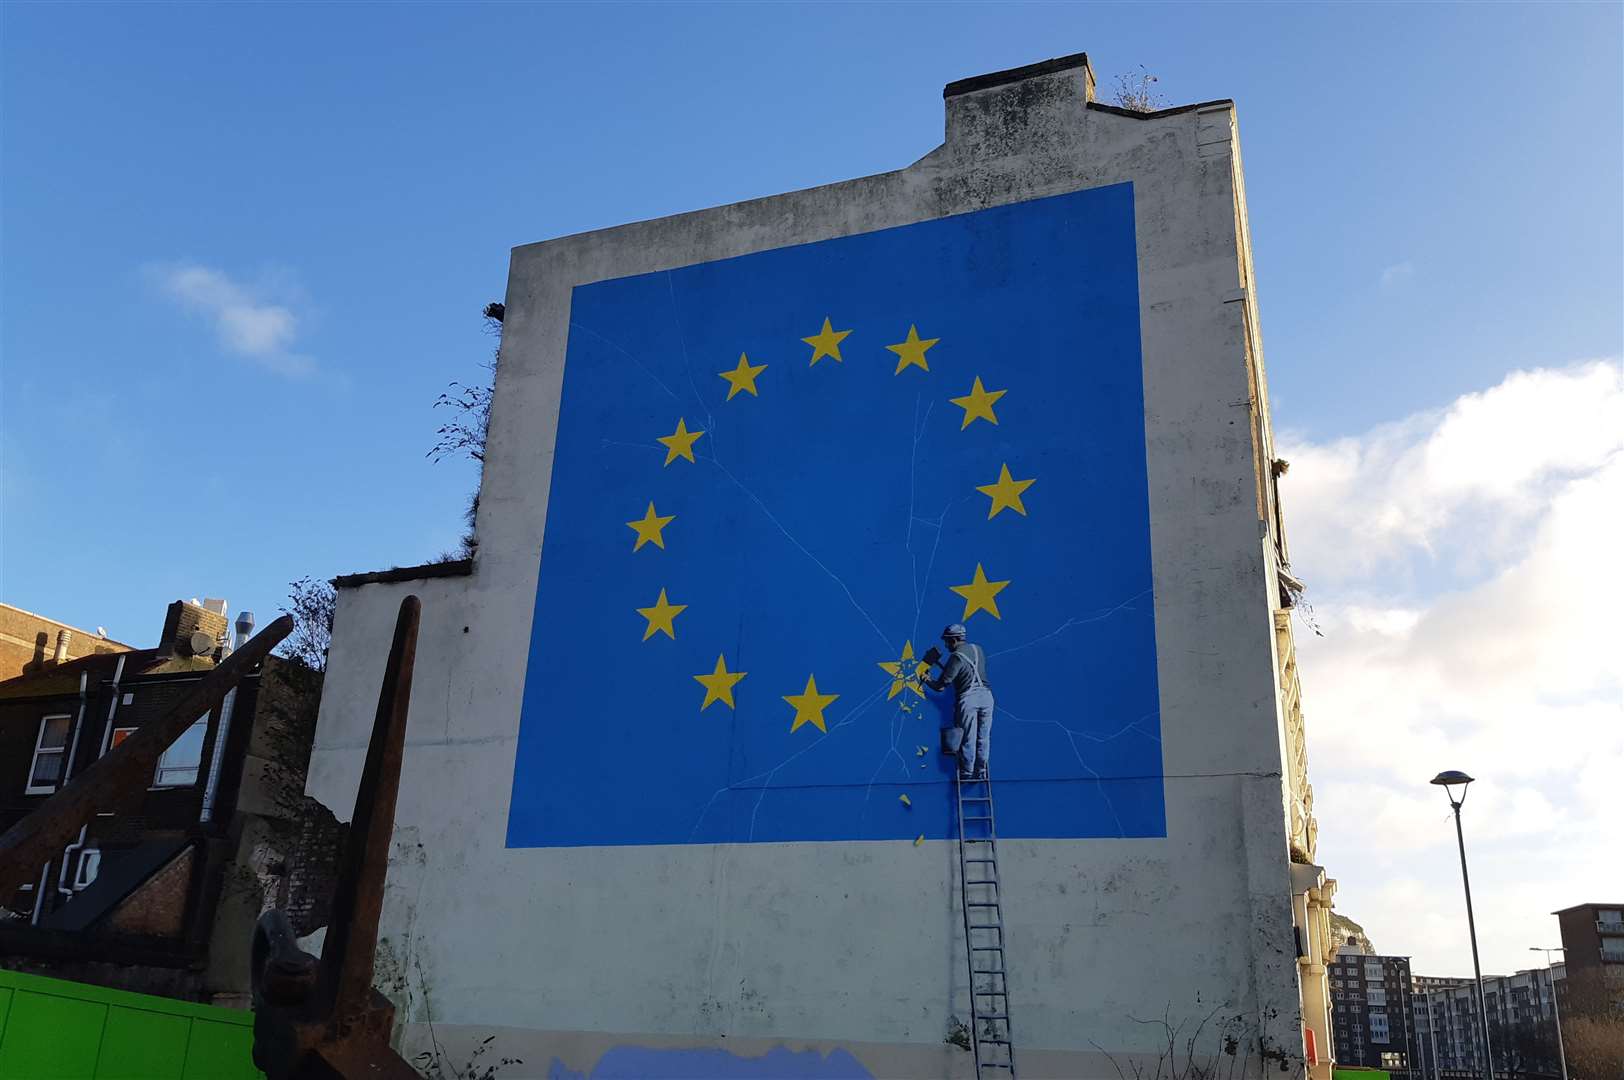 The original Banksy piece in Bench Street, Dover, 2017